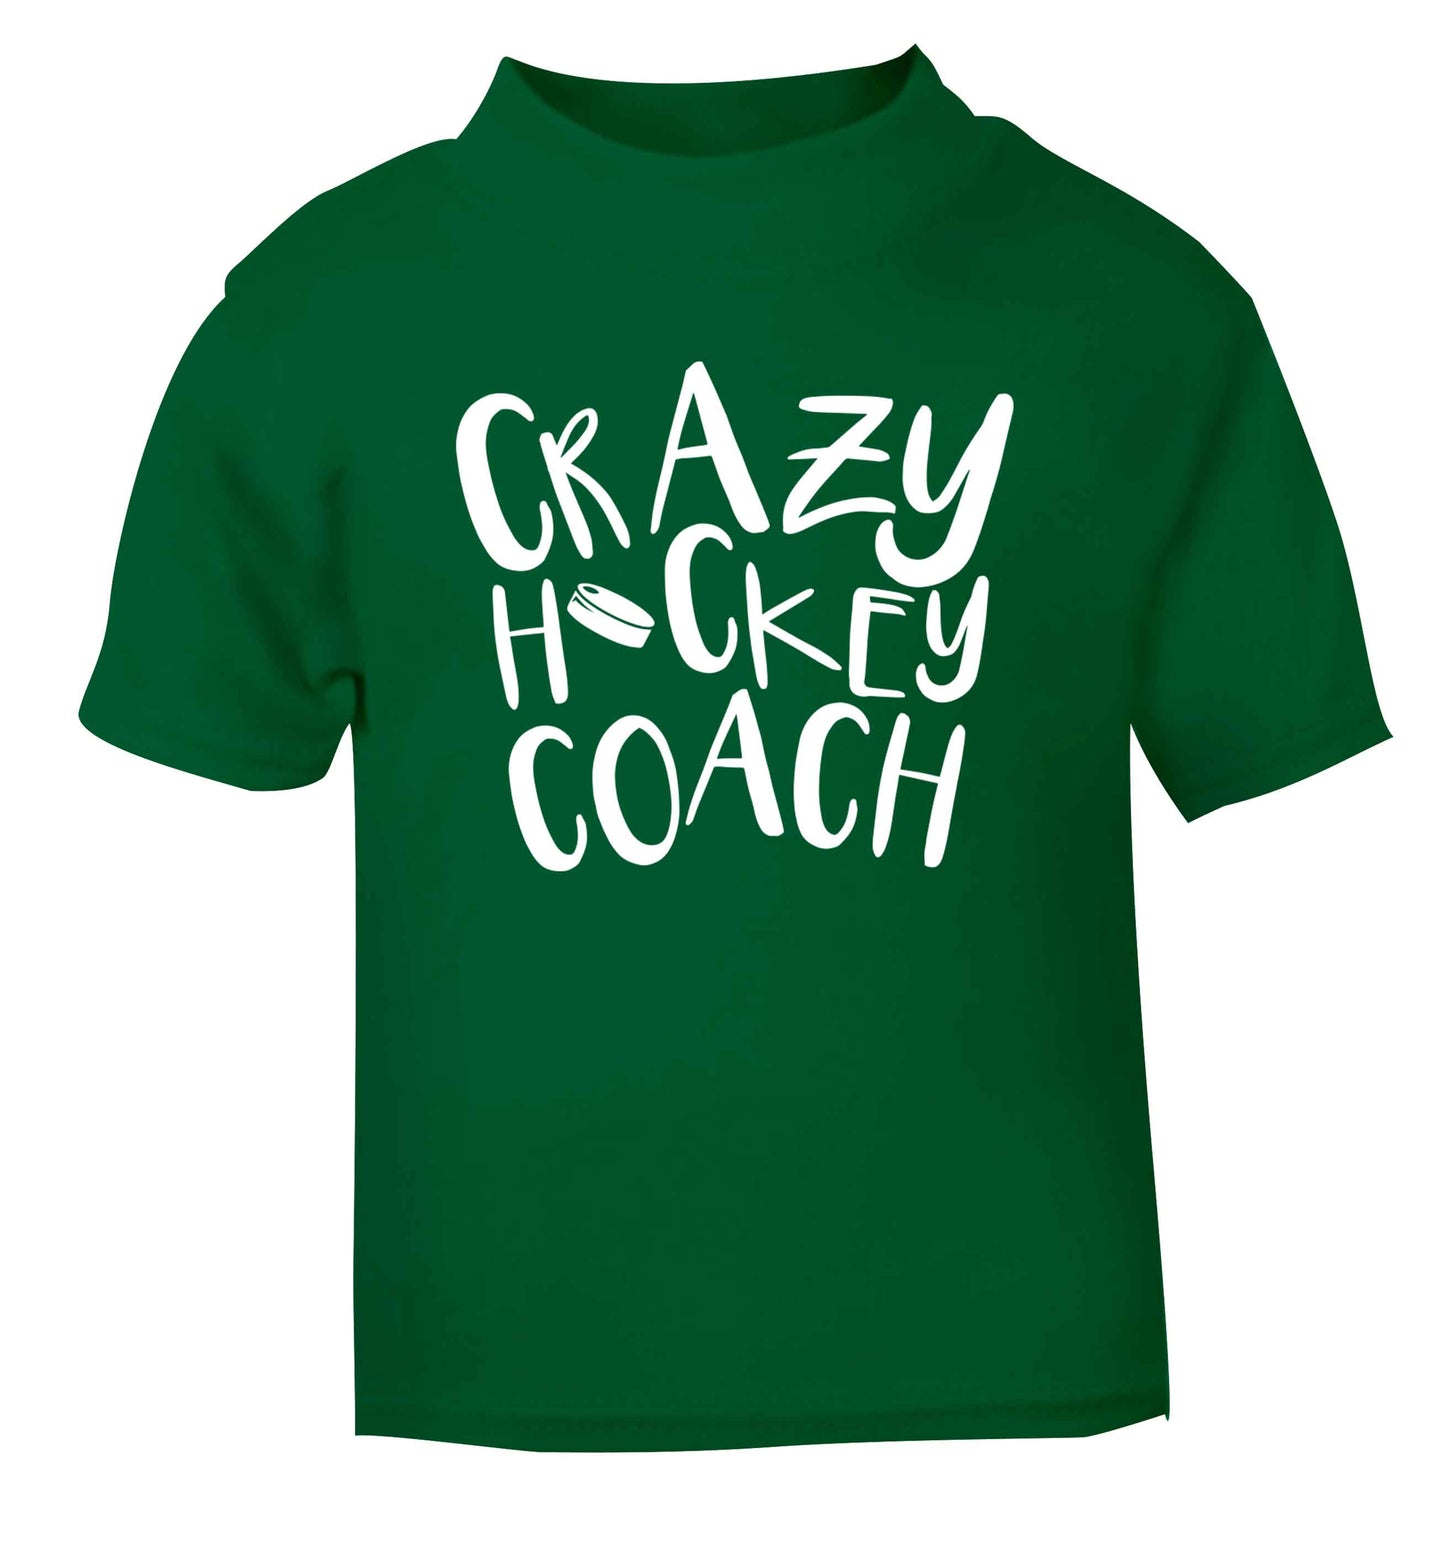 Crazy hockey coach green Baby Toddler Tshirt 2 Years